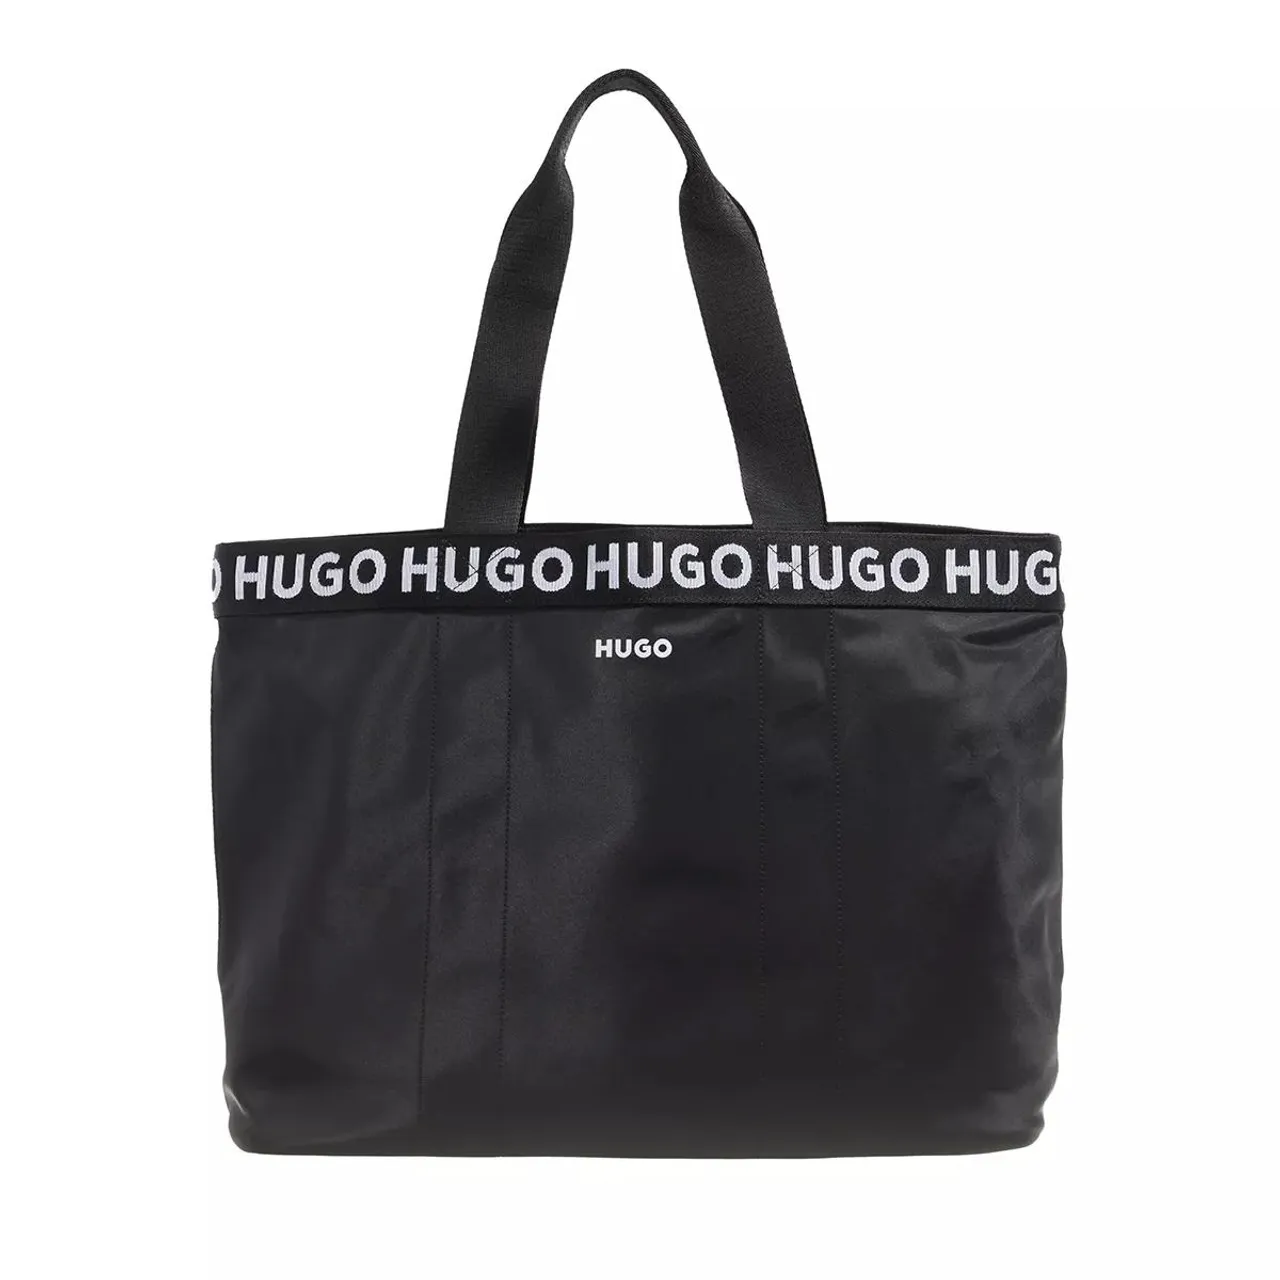 Hugo Tote Bags - Becky Tote - black - Tote Bags for ladies